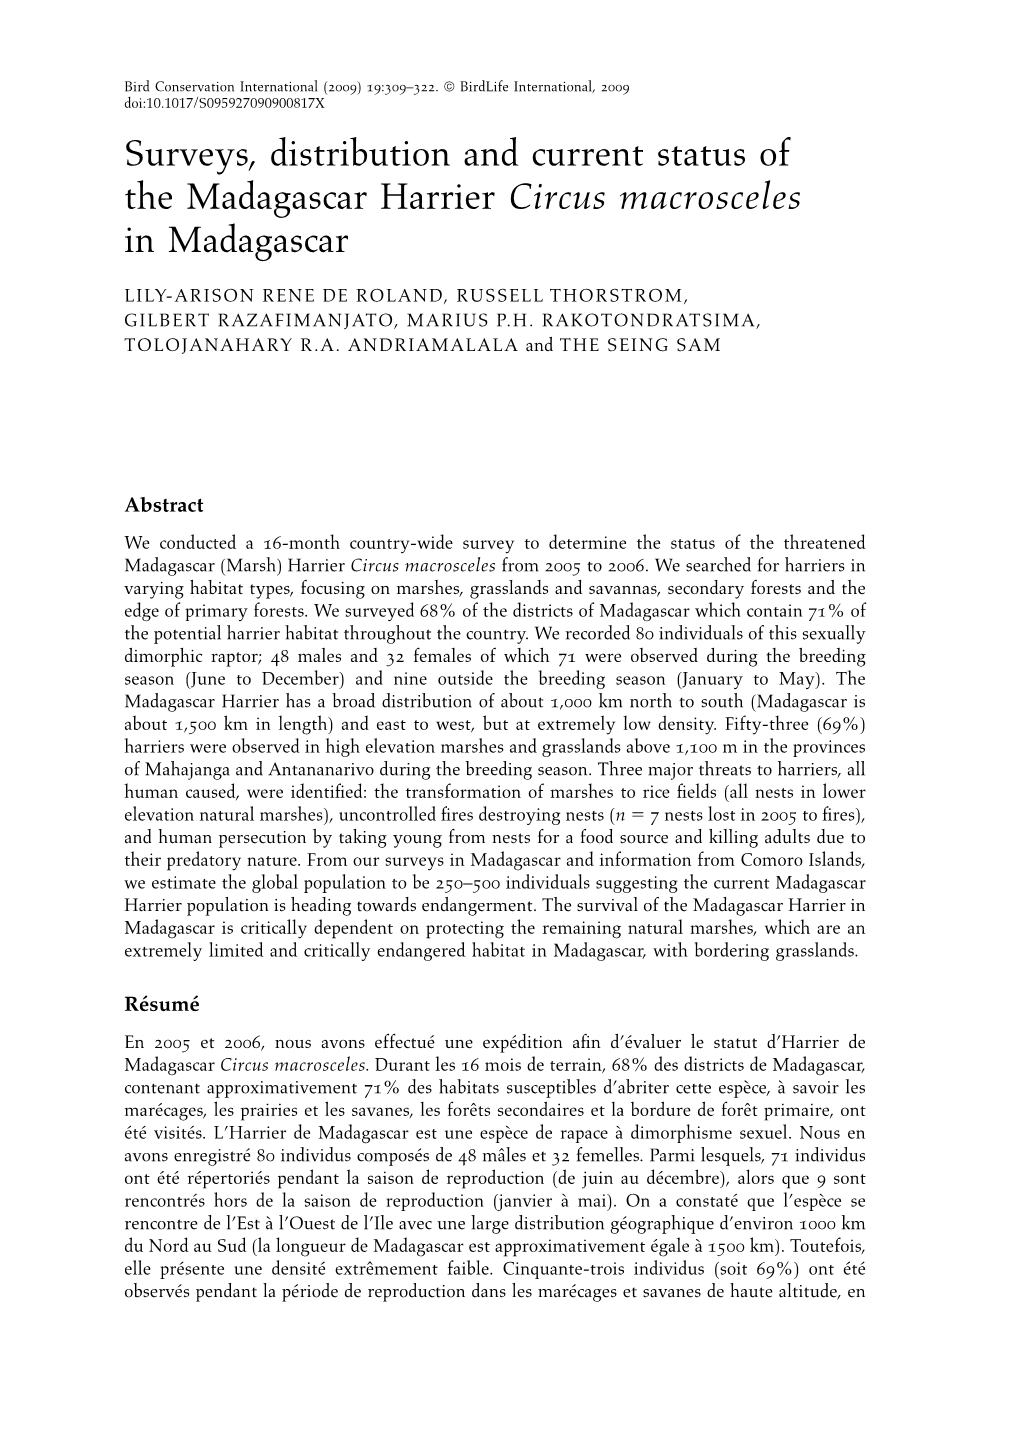 Surveys, Distribution and Current Status of the Madagascar Harrier Circus Macrosceles in Madagascar